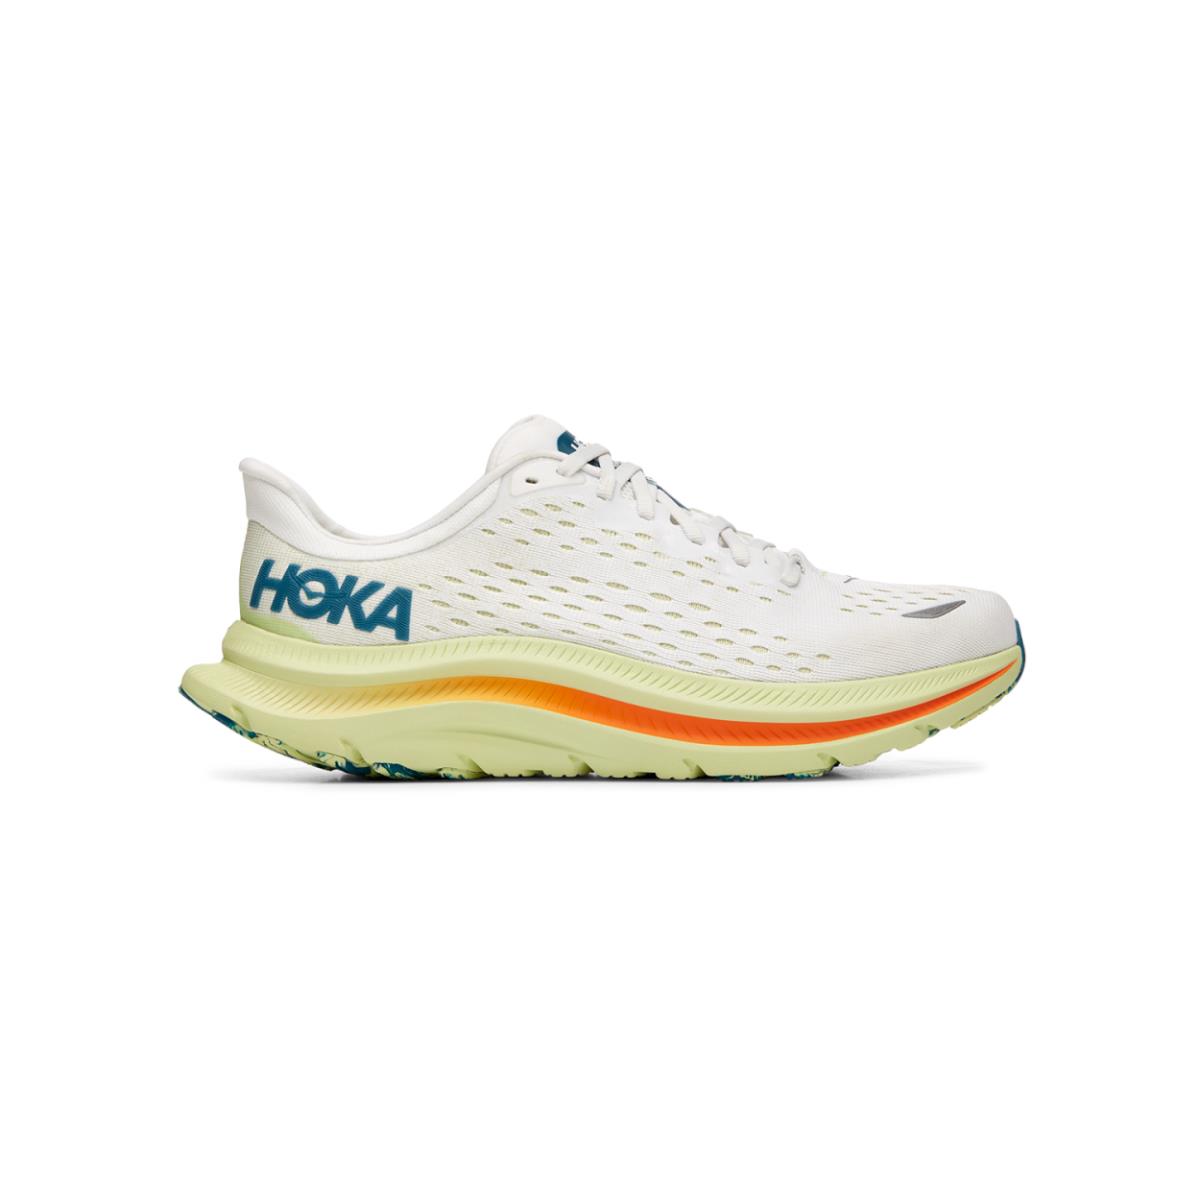 Hoka One One Kawana Blanc De Blanc Running Shoe Men`s Sizes 8-13